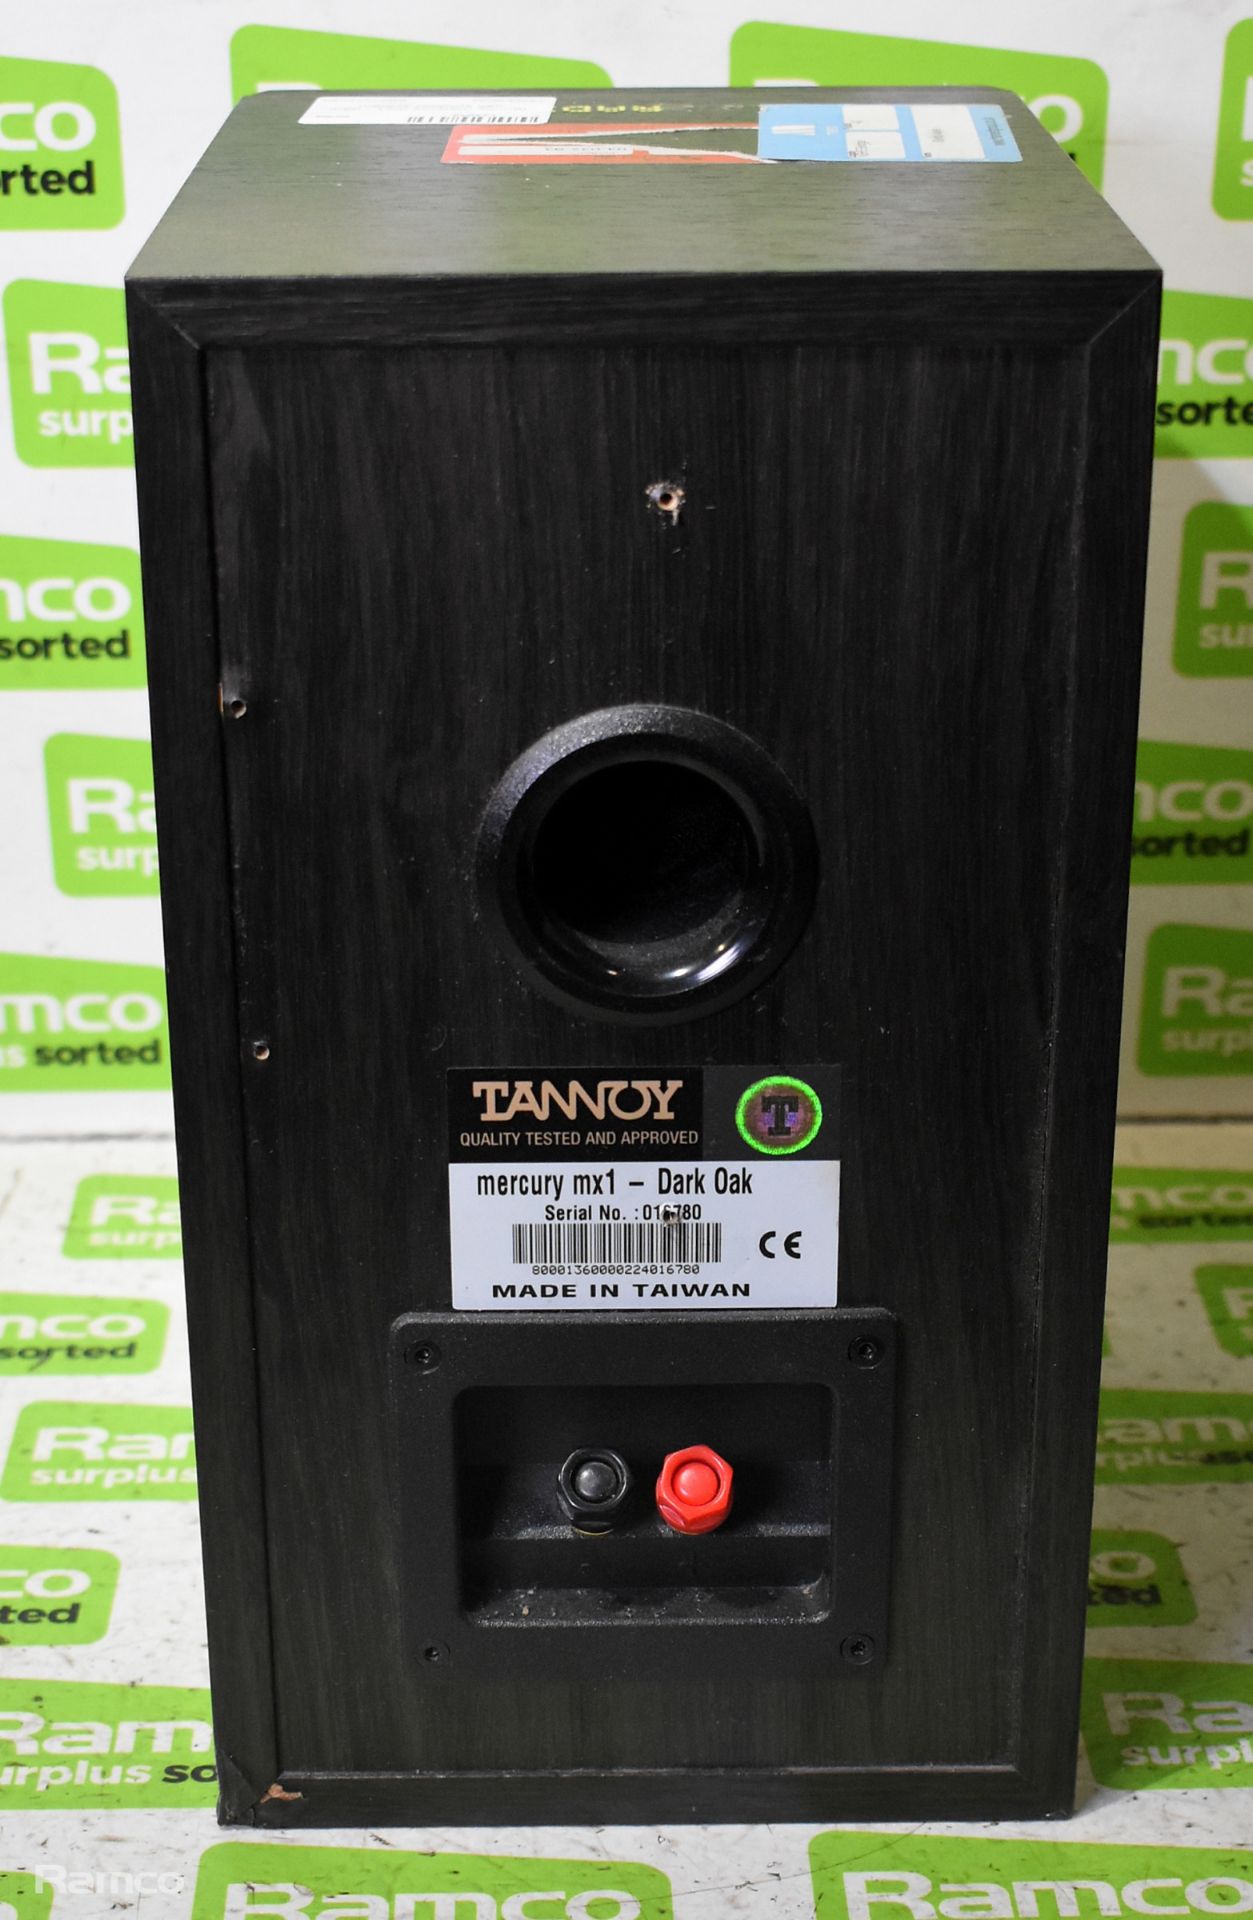 6x Tannoy mercury mx1 speakers - dark oak effect - Image 4 of 6